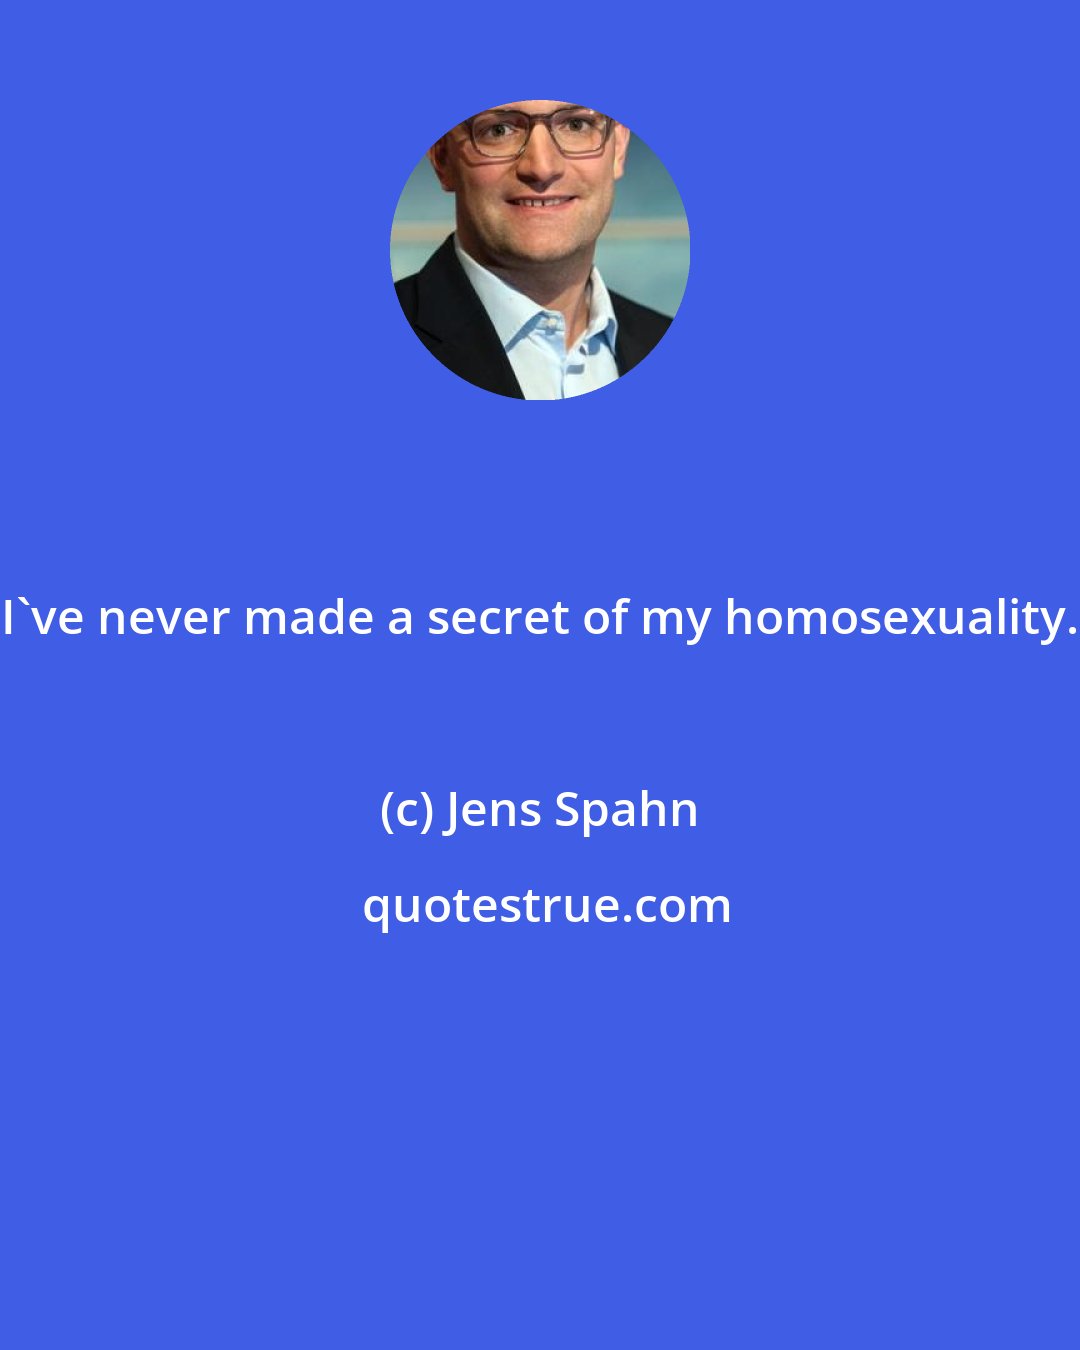 Jens Spahn: I've never made a secret of my homosexuality.